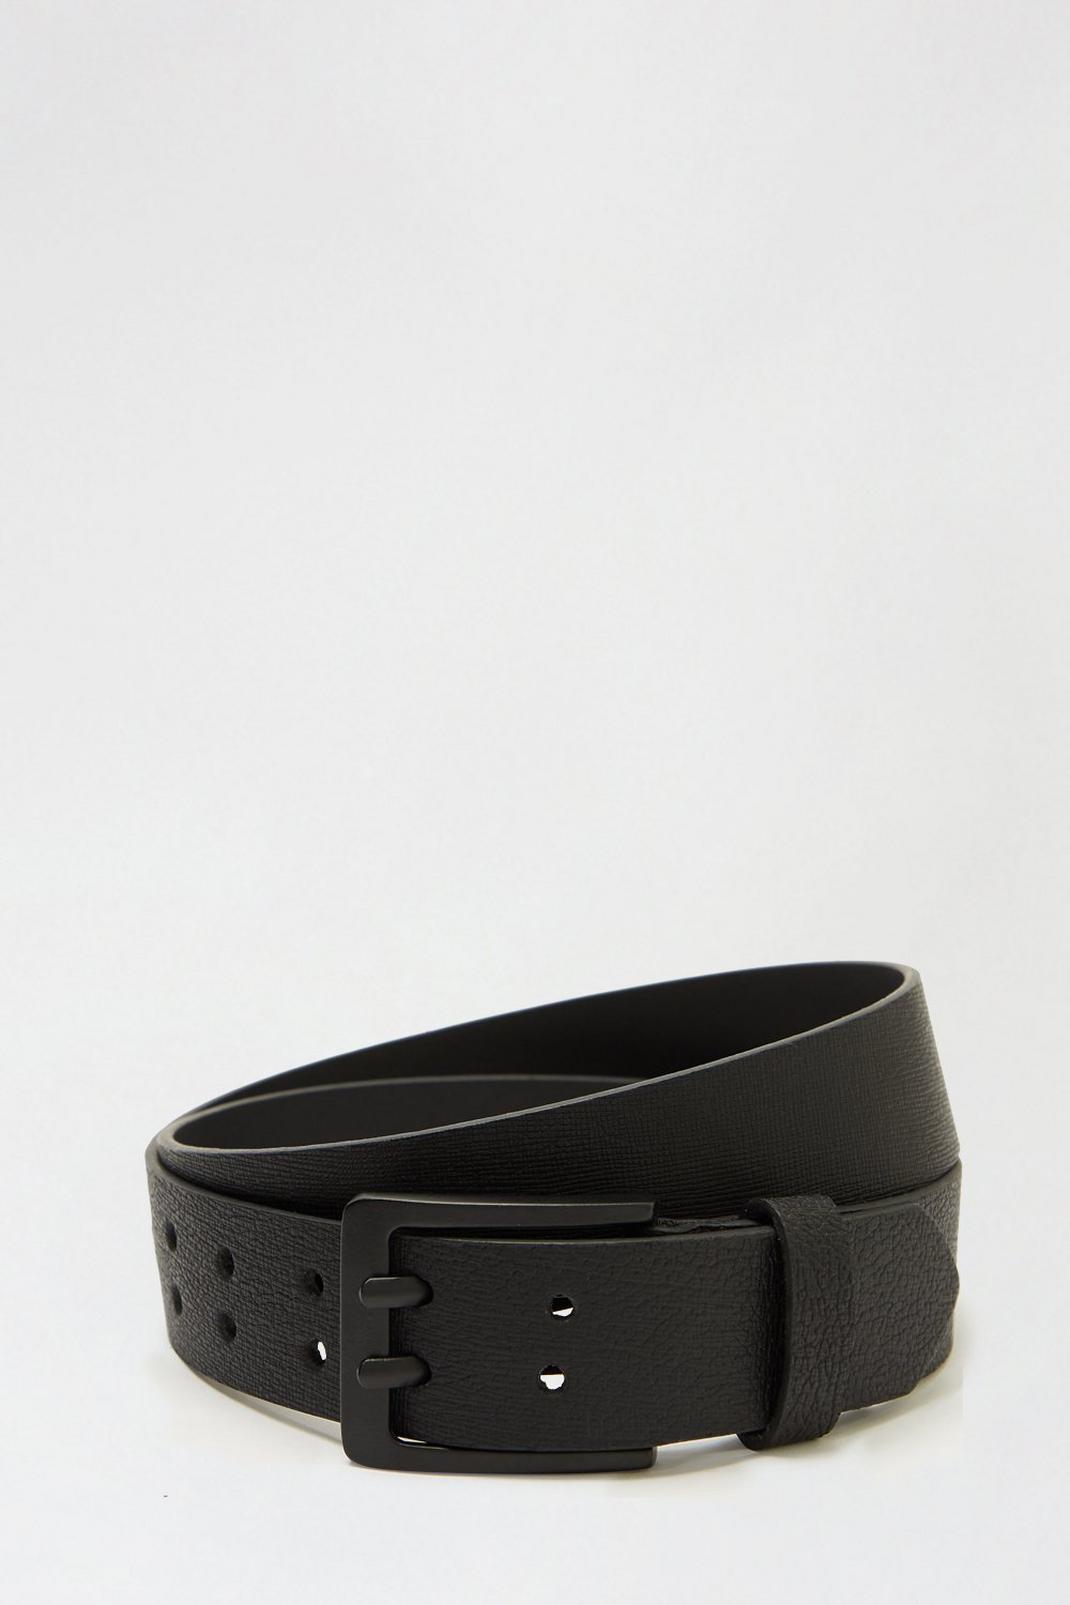 105 Leather Black Double Prong Belt image number 1